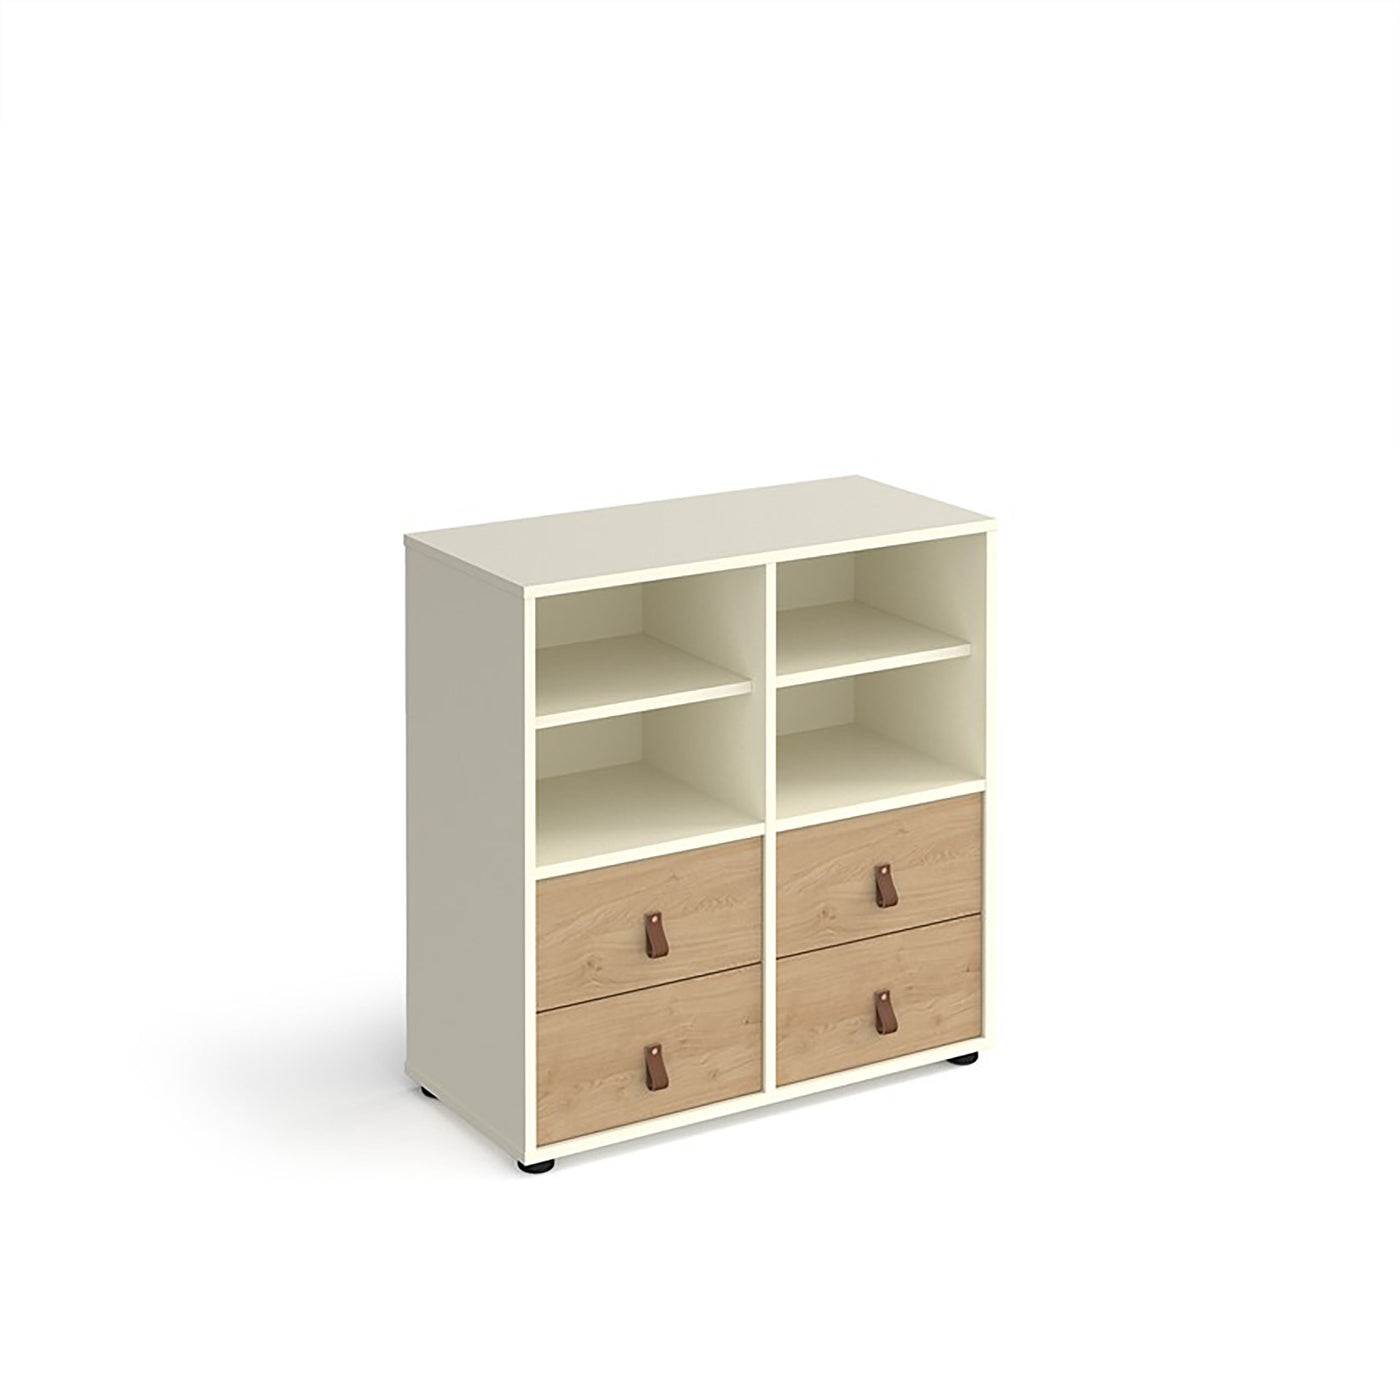 Cube Storage Unit Bundle 4 | Shelf with Drawers | Home Office Storage | Home Furnishings | Home Storage |  Wooden Storage | Shelves | Home Office Furniture